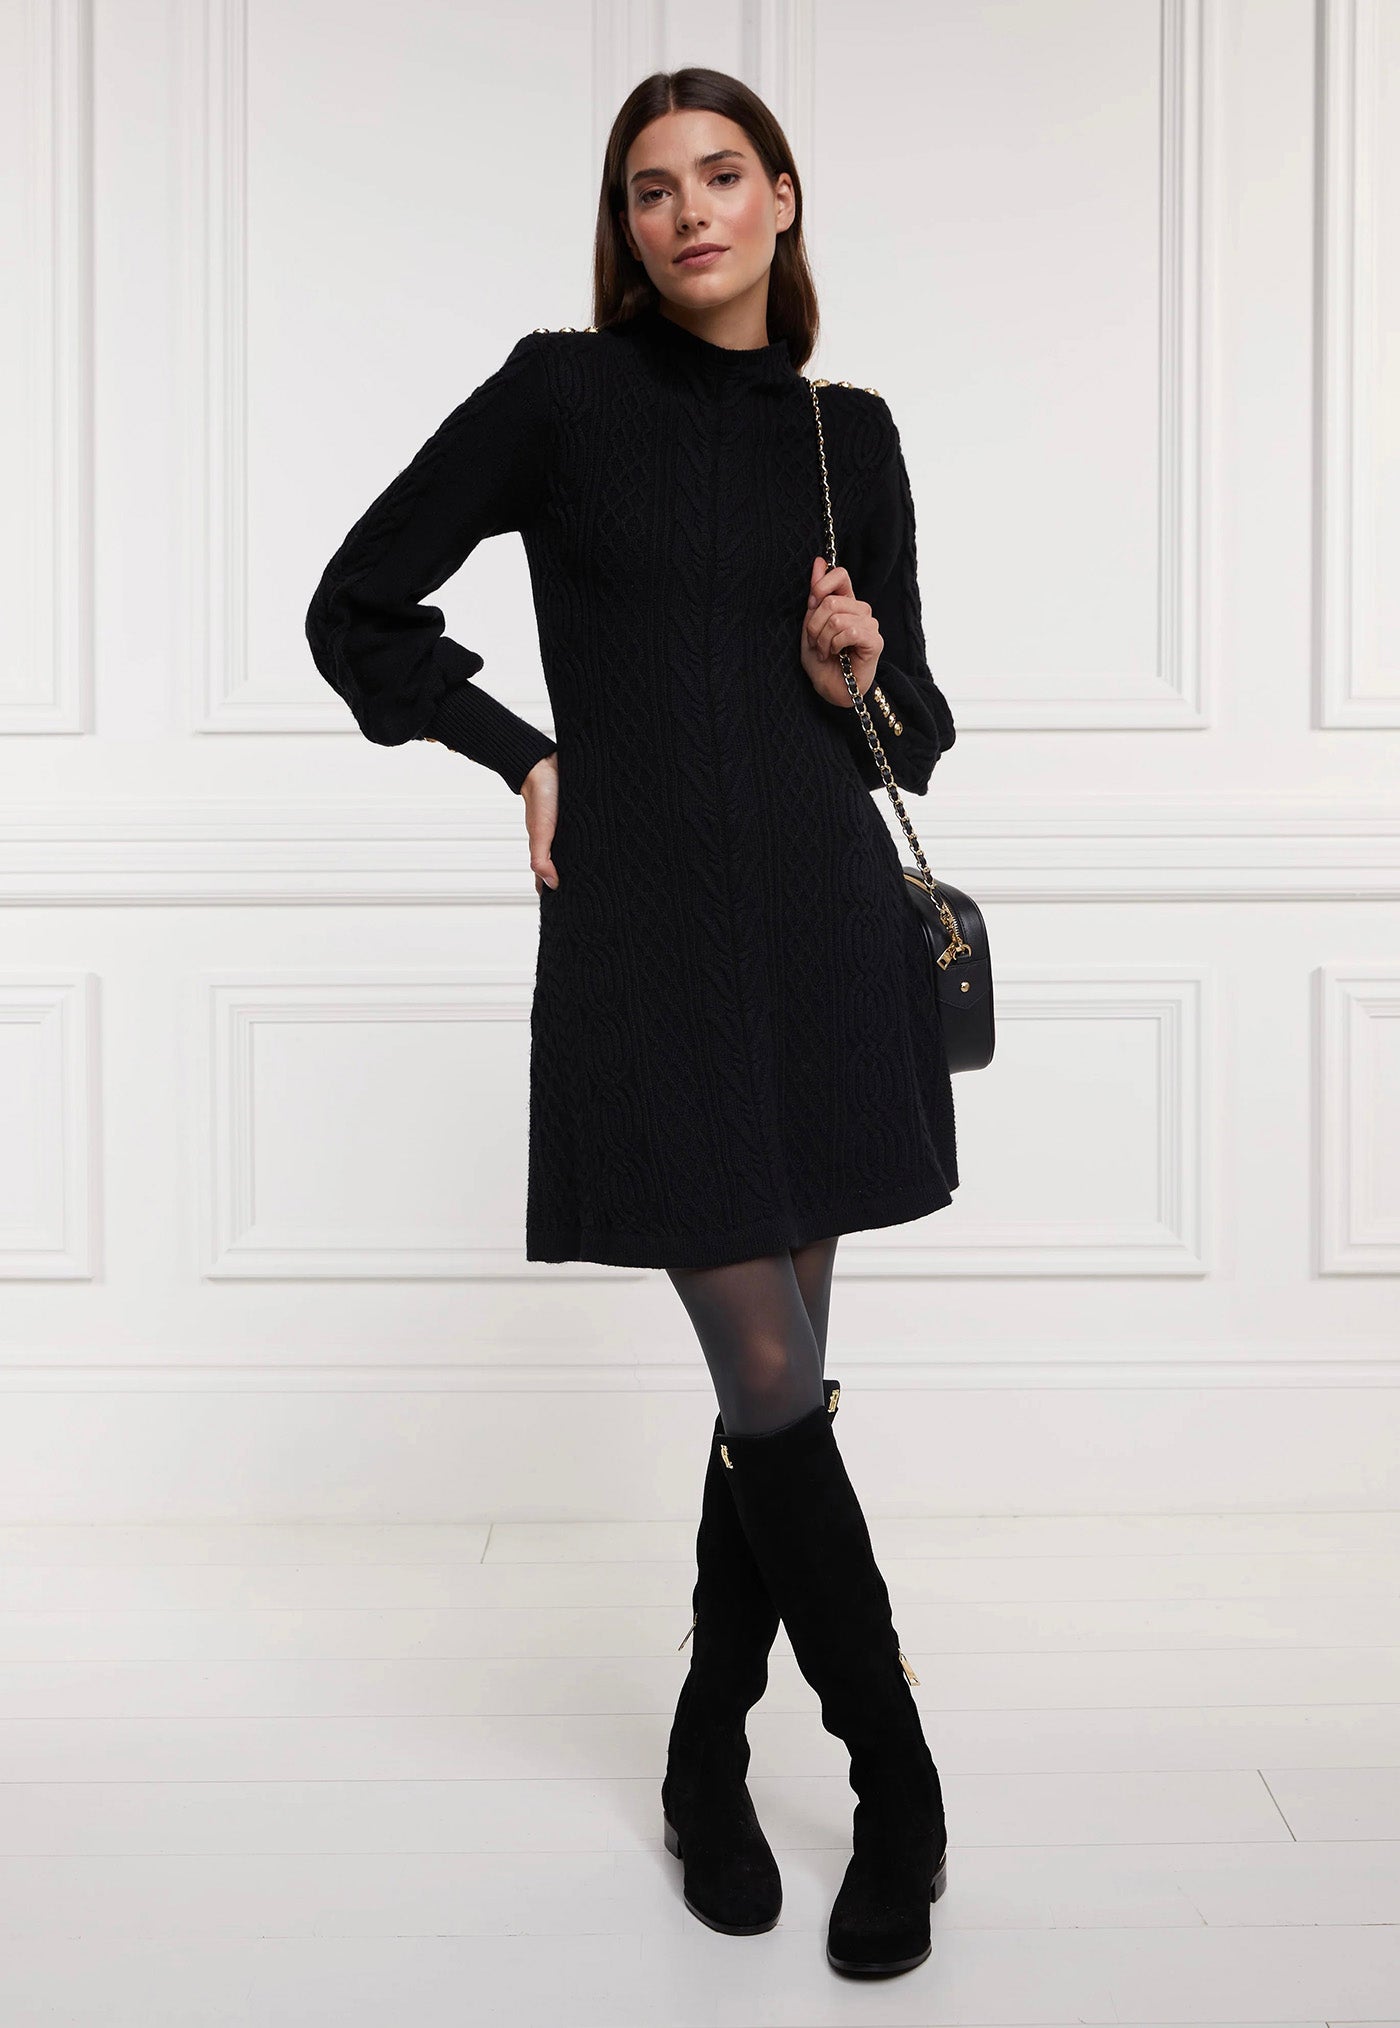 Rachel Mini Dress - Black sold by Angel Divine